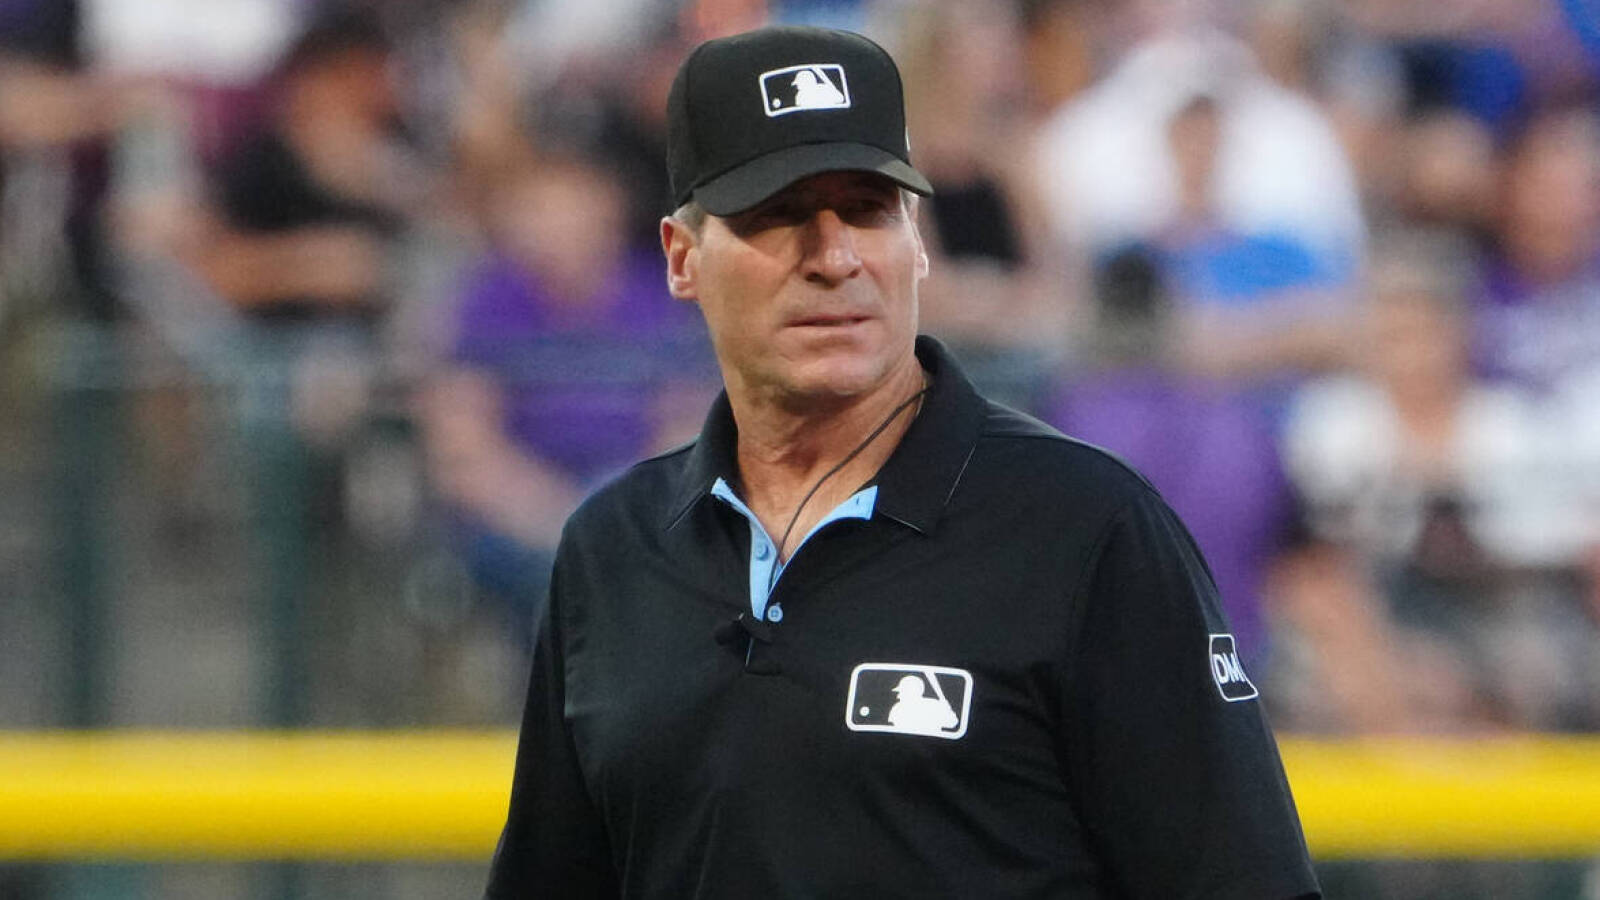 Controversial MLB umpire Angel Hernandez is already in midseason form